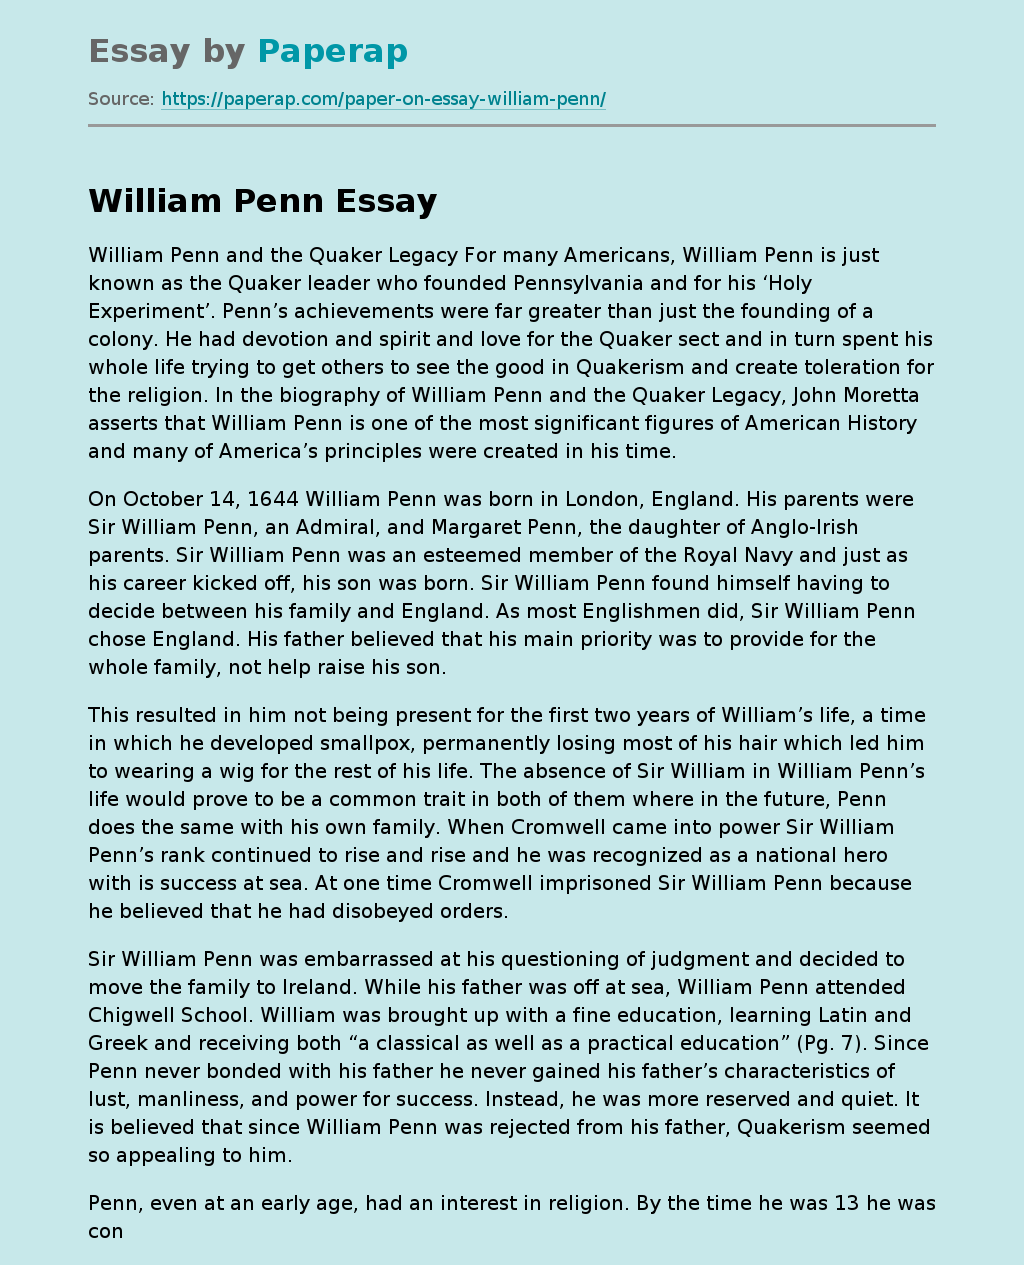 William Penn: Quaker Founder of Pennsylvania